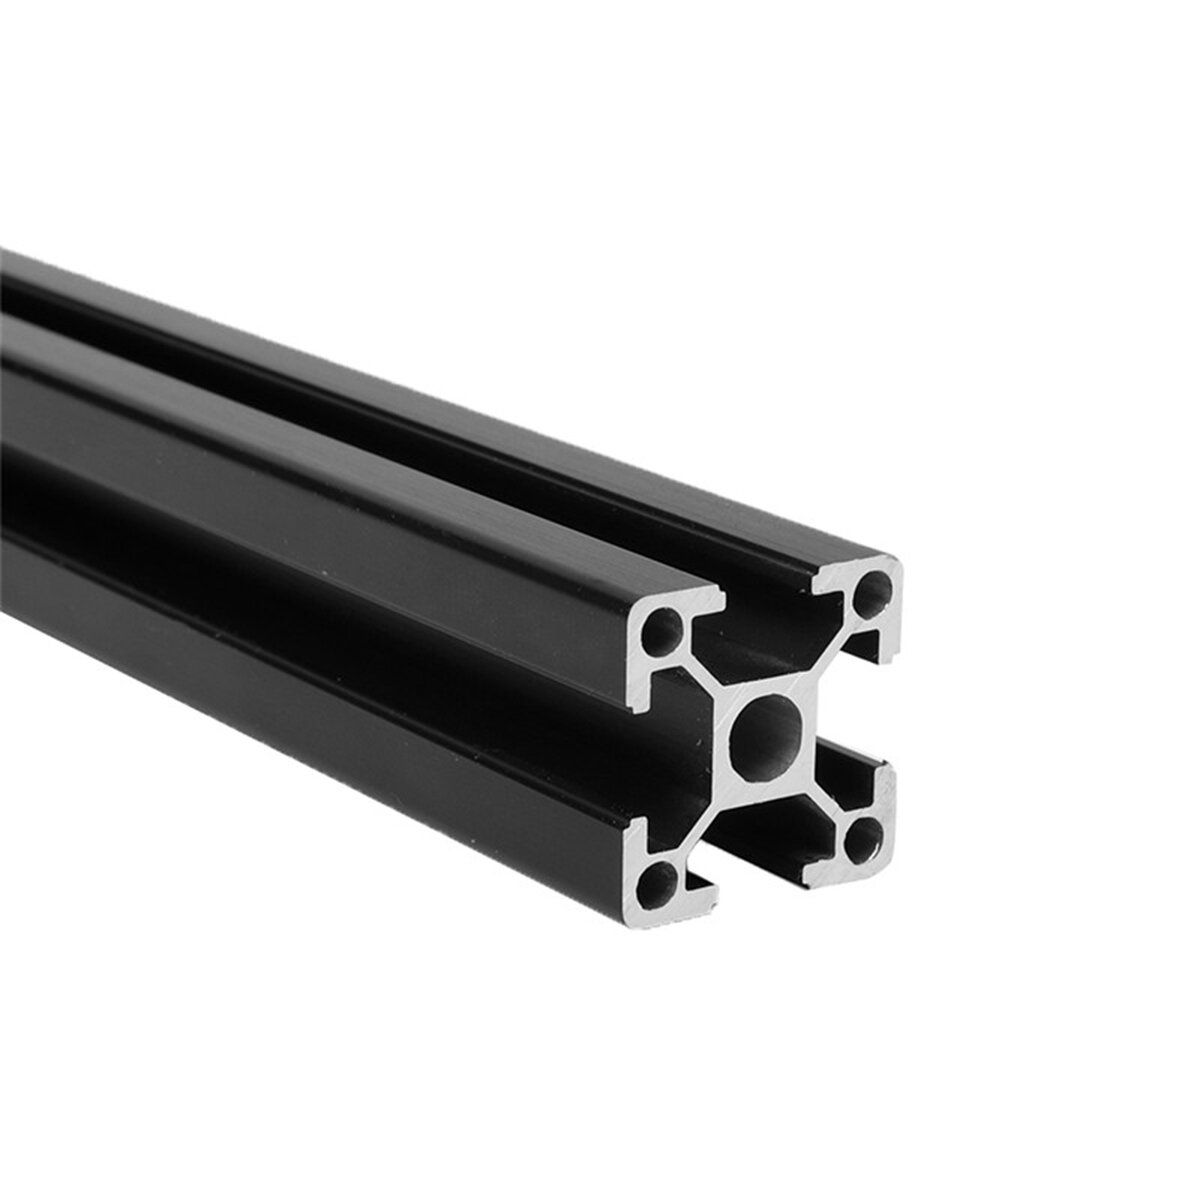 100-1200mm Length 2020 T-Slot Aluminum Profiles Extrusion FrameFor CNC Stands